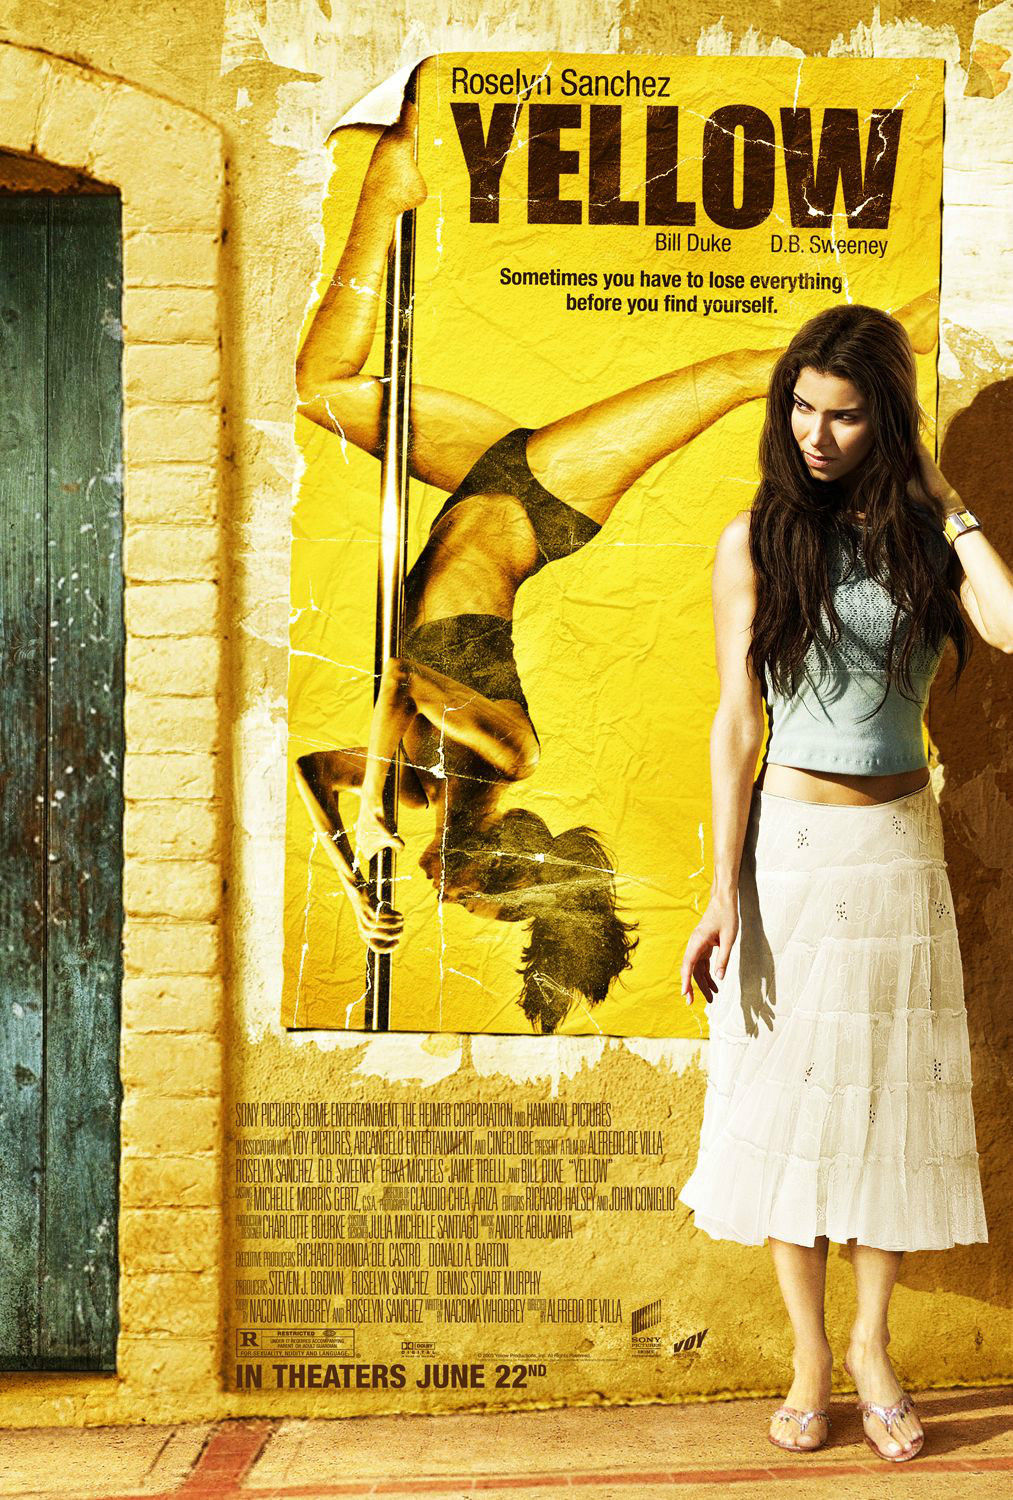 《yellow》是2007年上映的美国剧情电影,由阿尔弗雷多·德维拉执导